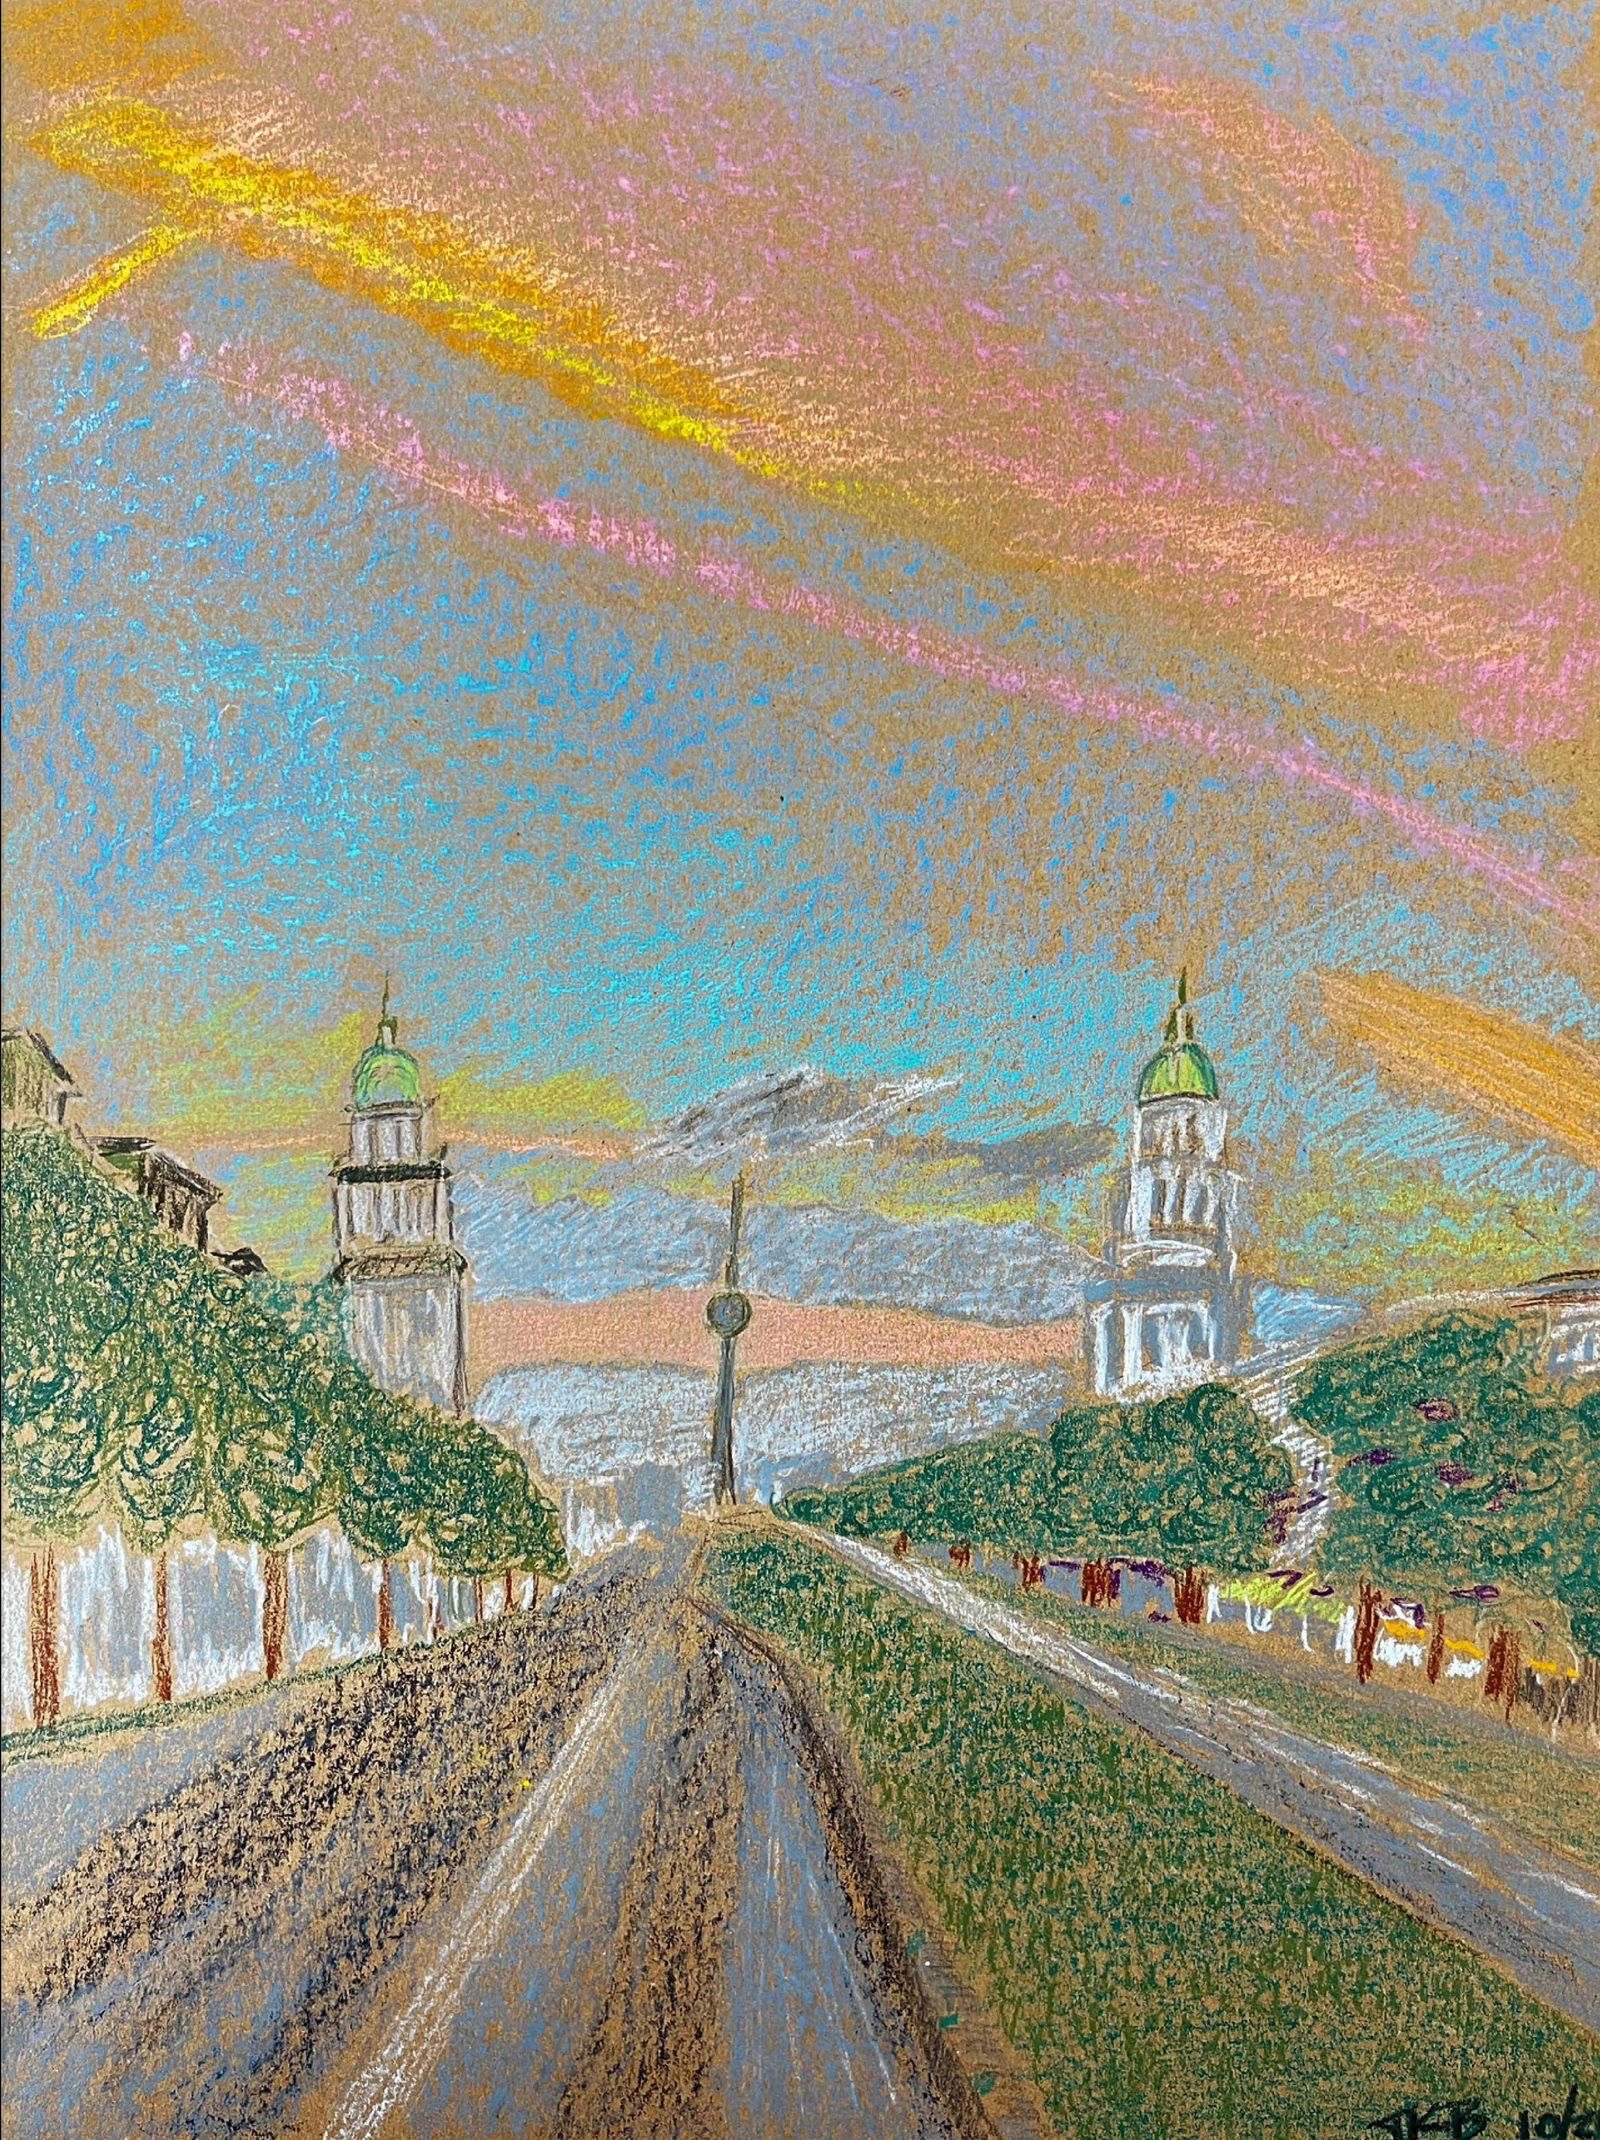 TKB, Sonnenuntergang Frankfurter Tor, 2021, 35 X 48 cm, Pastellkreide auf Papier